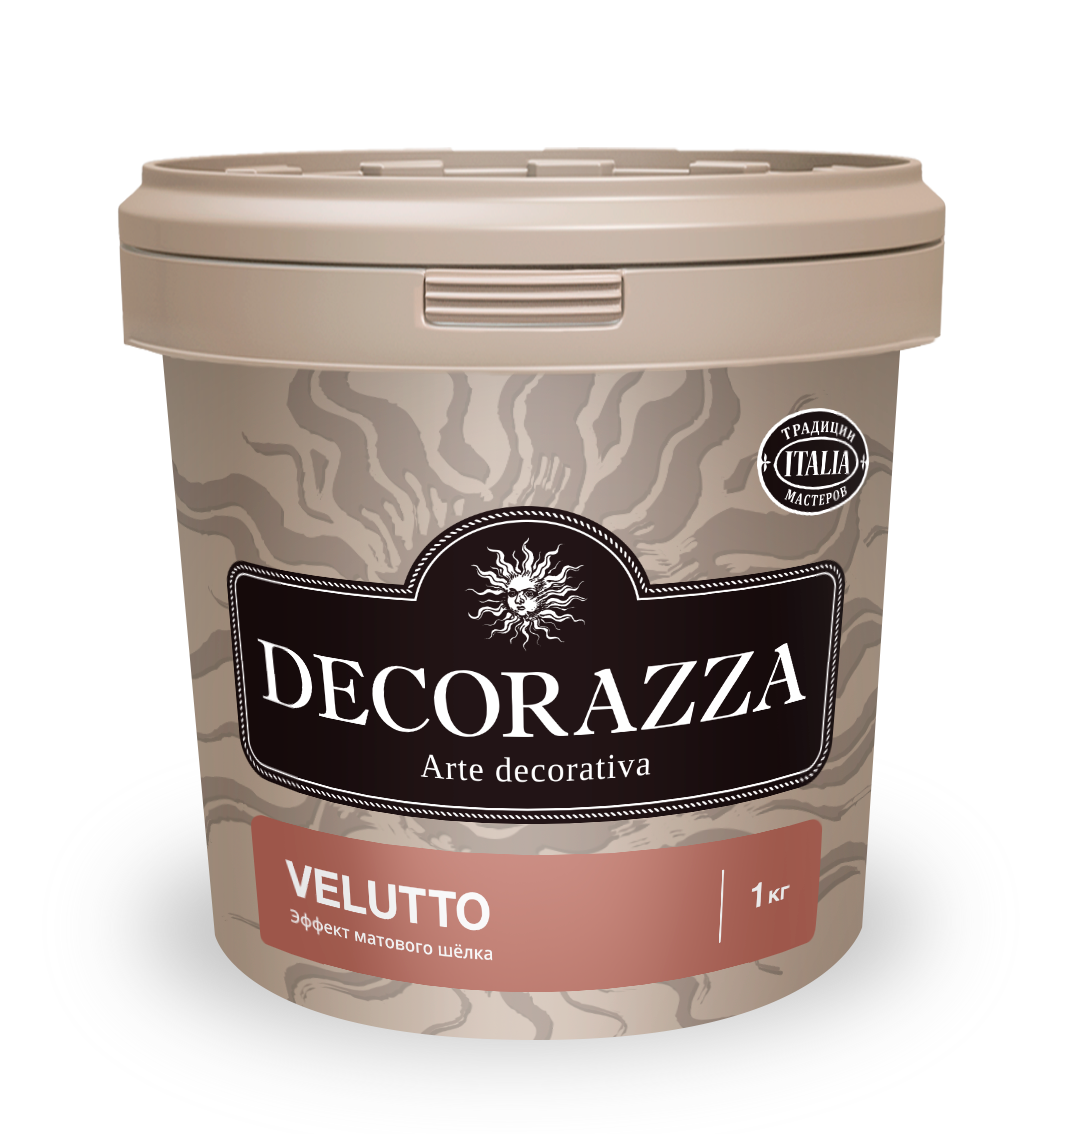 Декоративная штукатурка Decorazza Velluto VT 001, 1 кг декоративная штукатурка decorazza art beton ab 001 4 кг